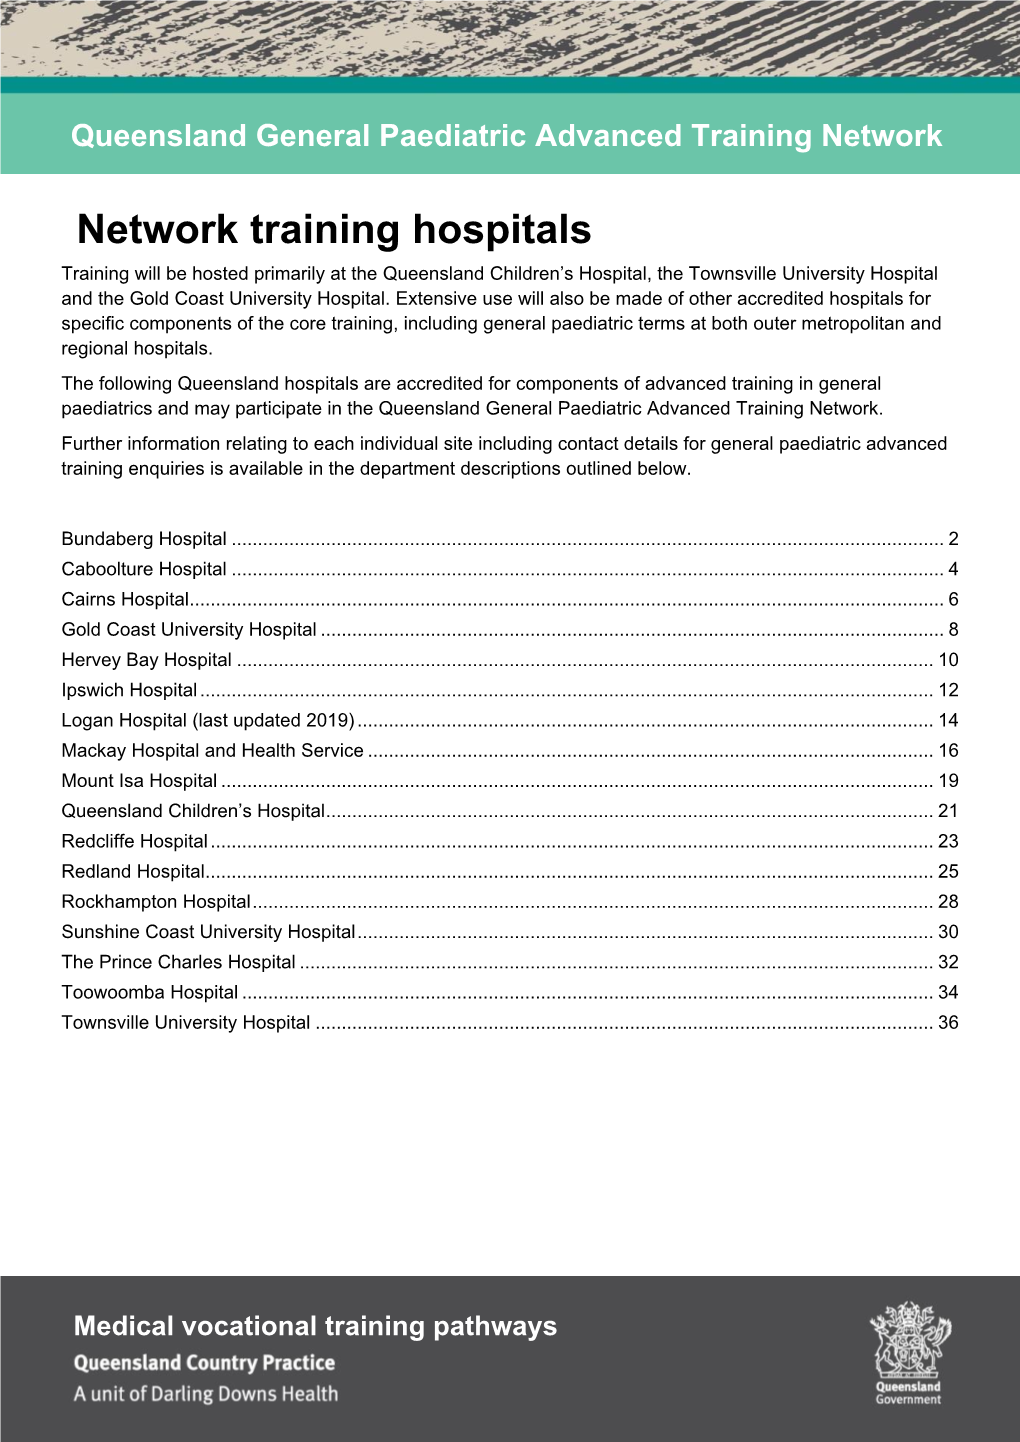 Network Training Hospitals